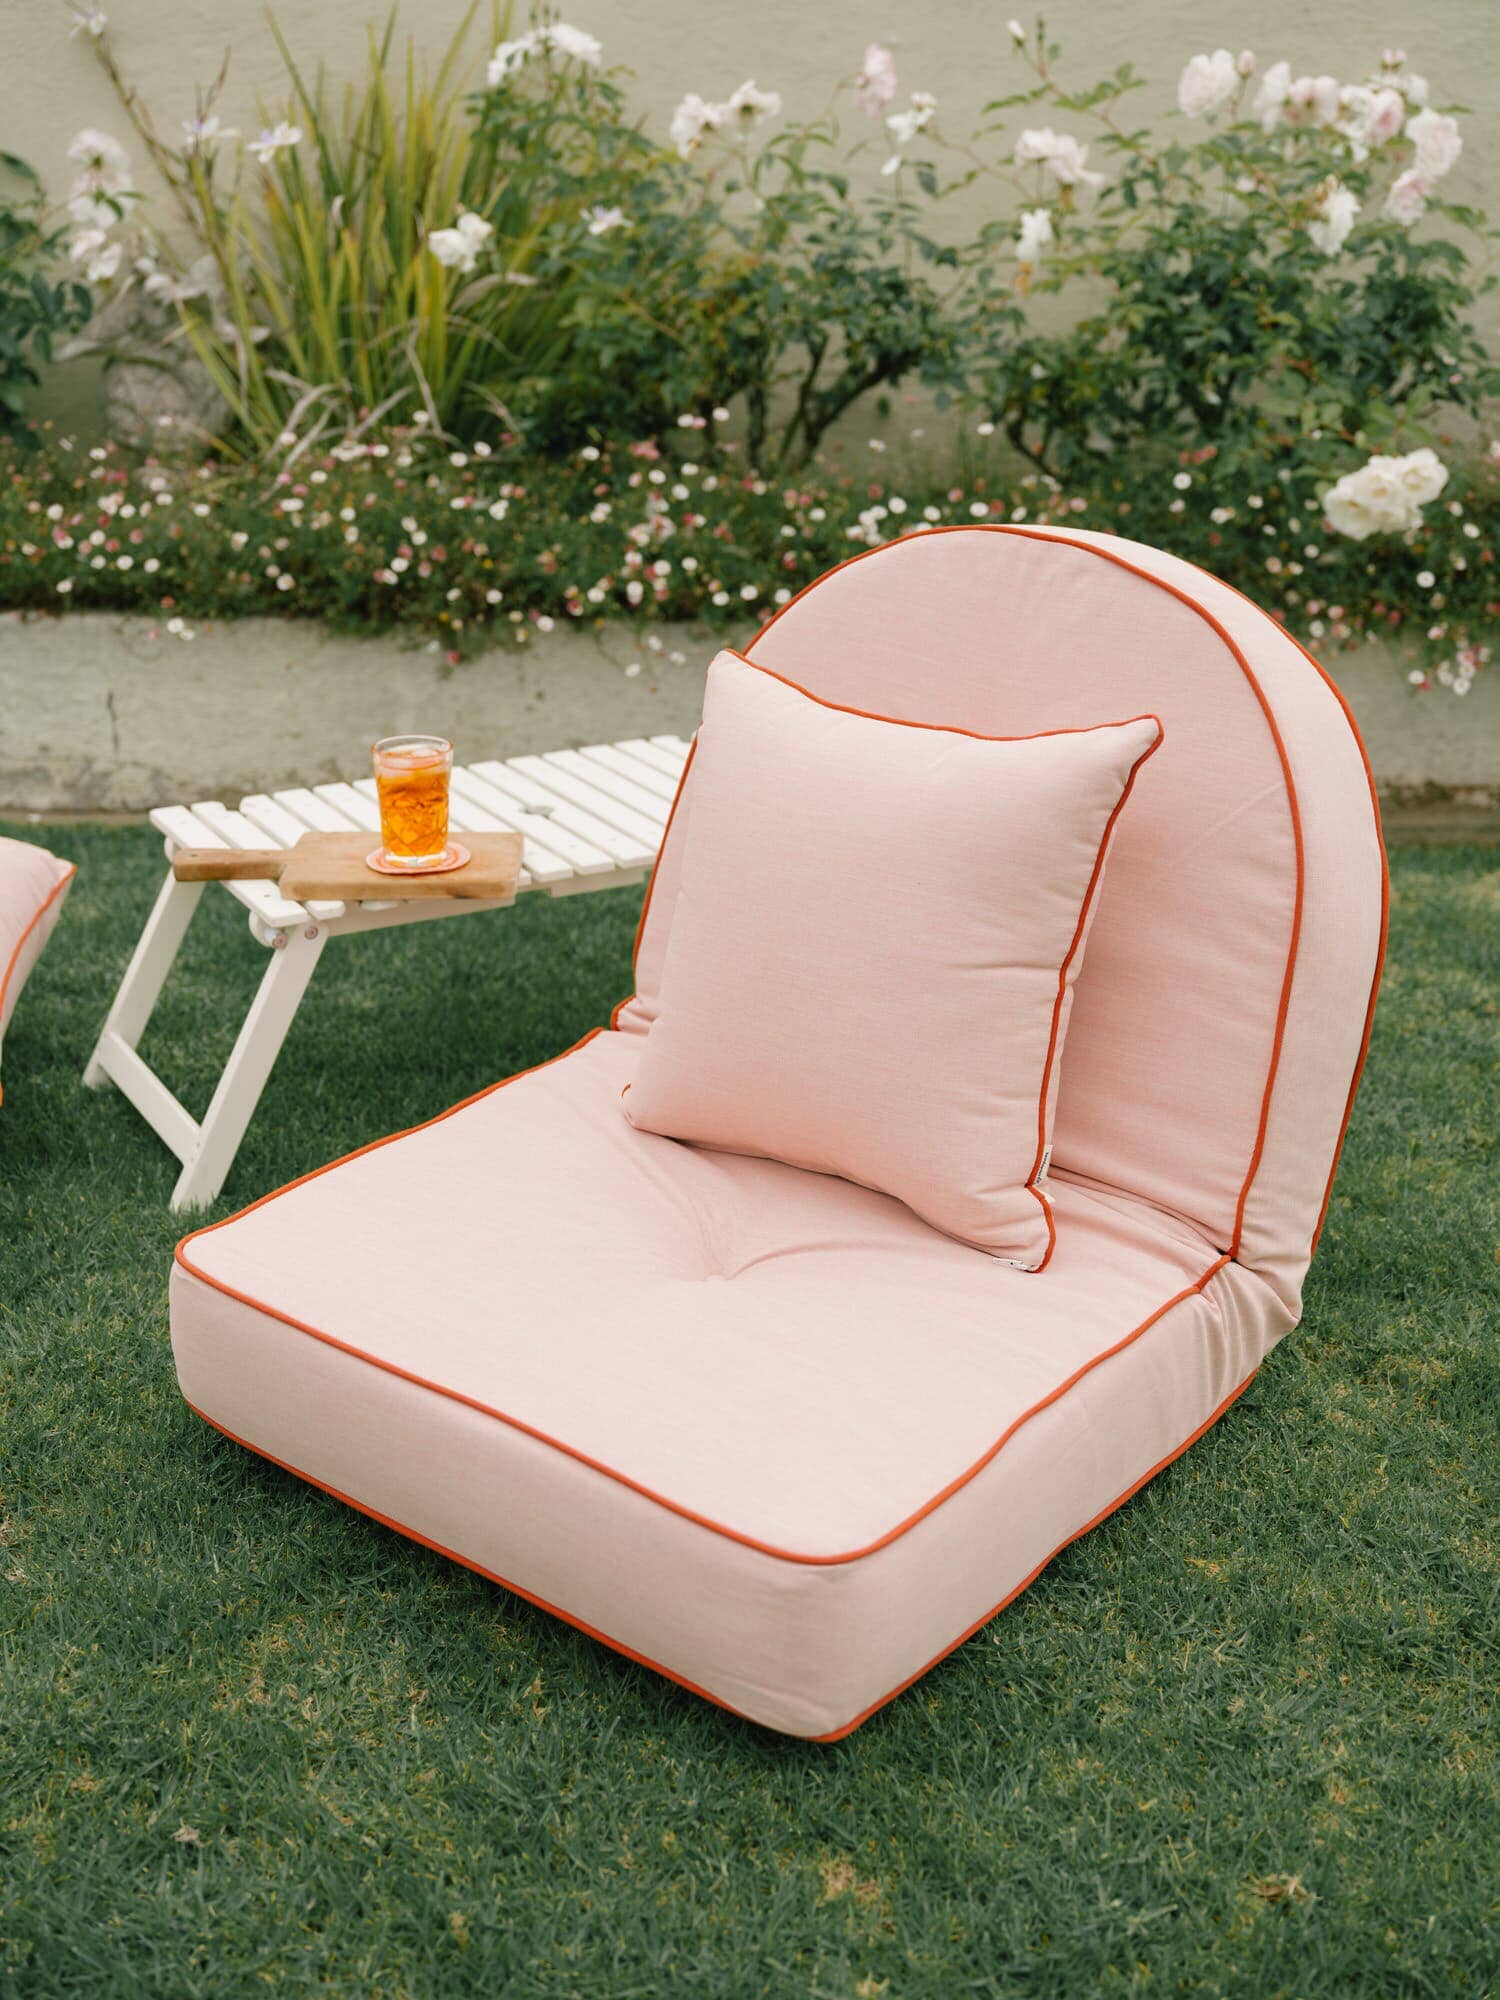 Riviera pink pillow lounger in a garden setting